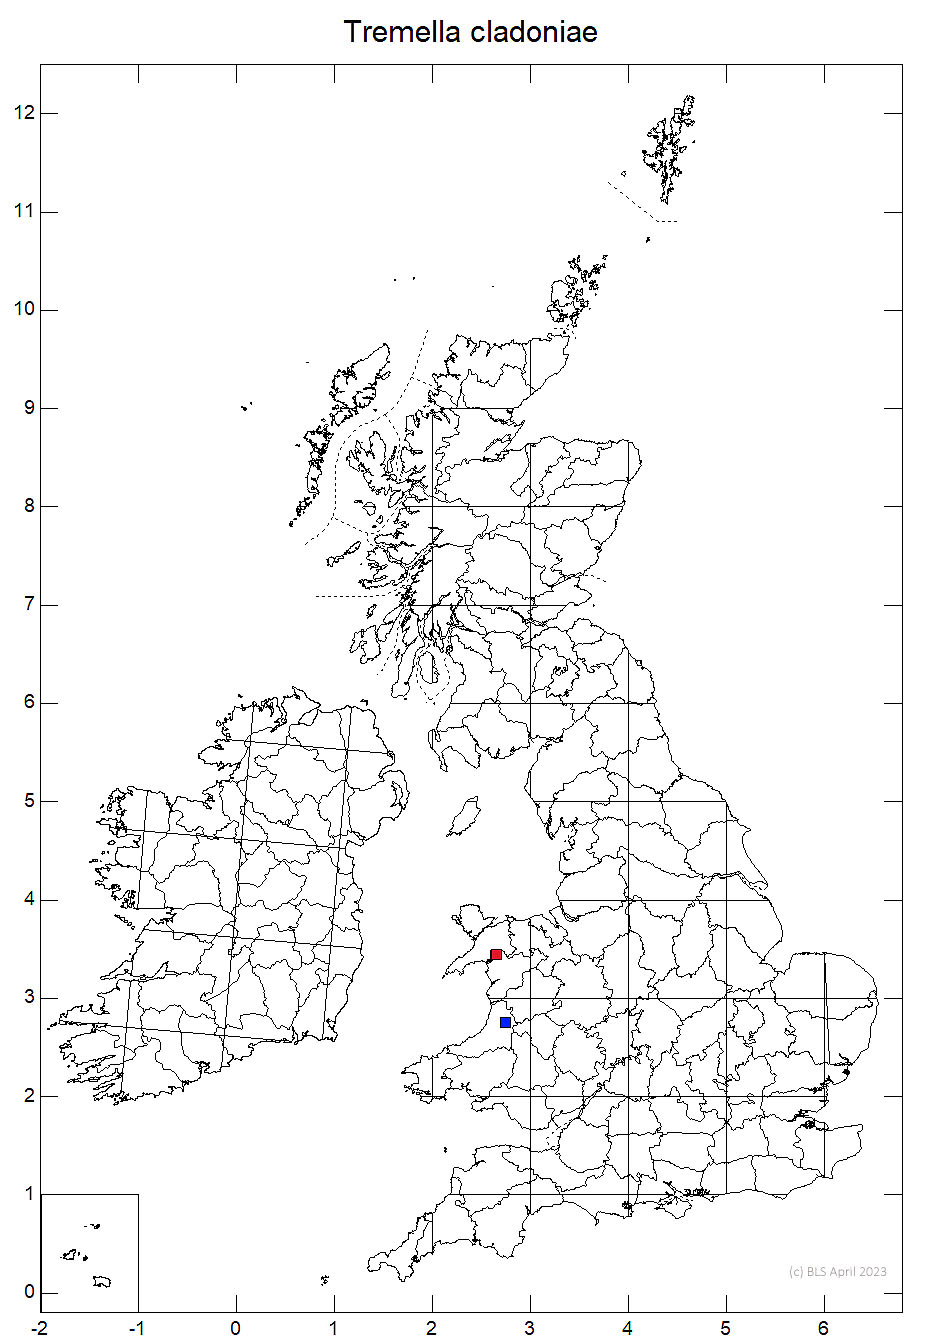 Tremella cladoniae 10km sq distribution map